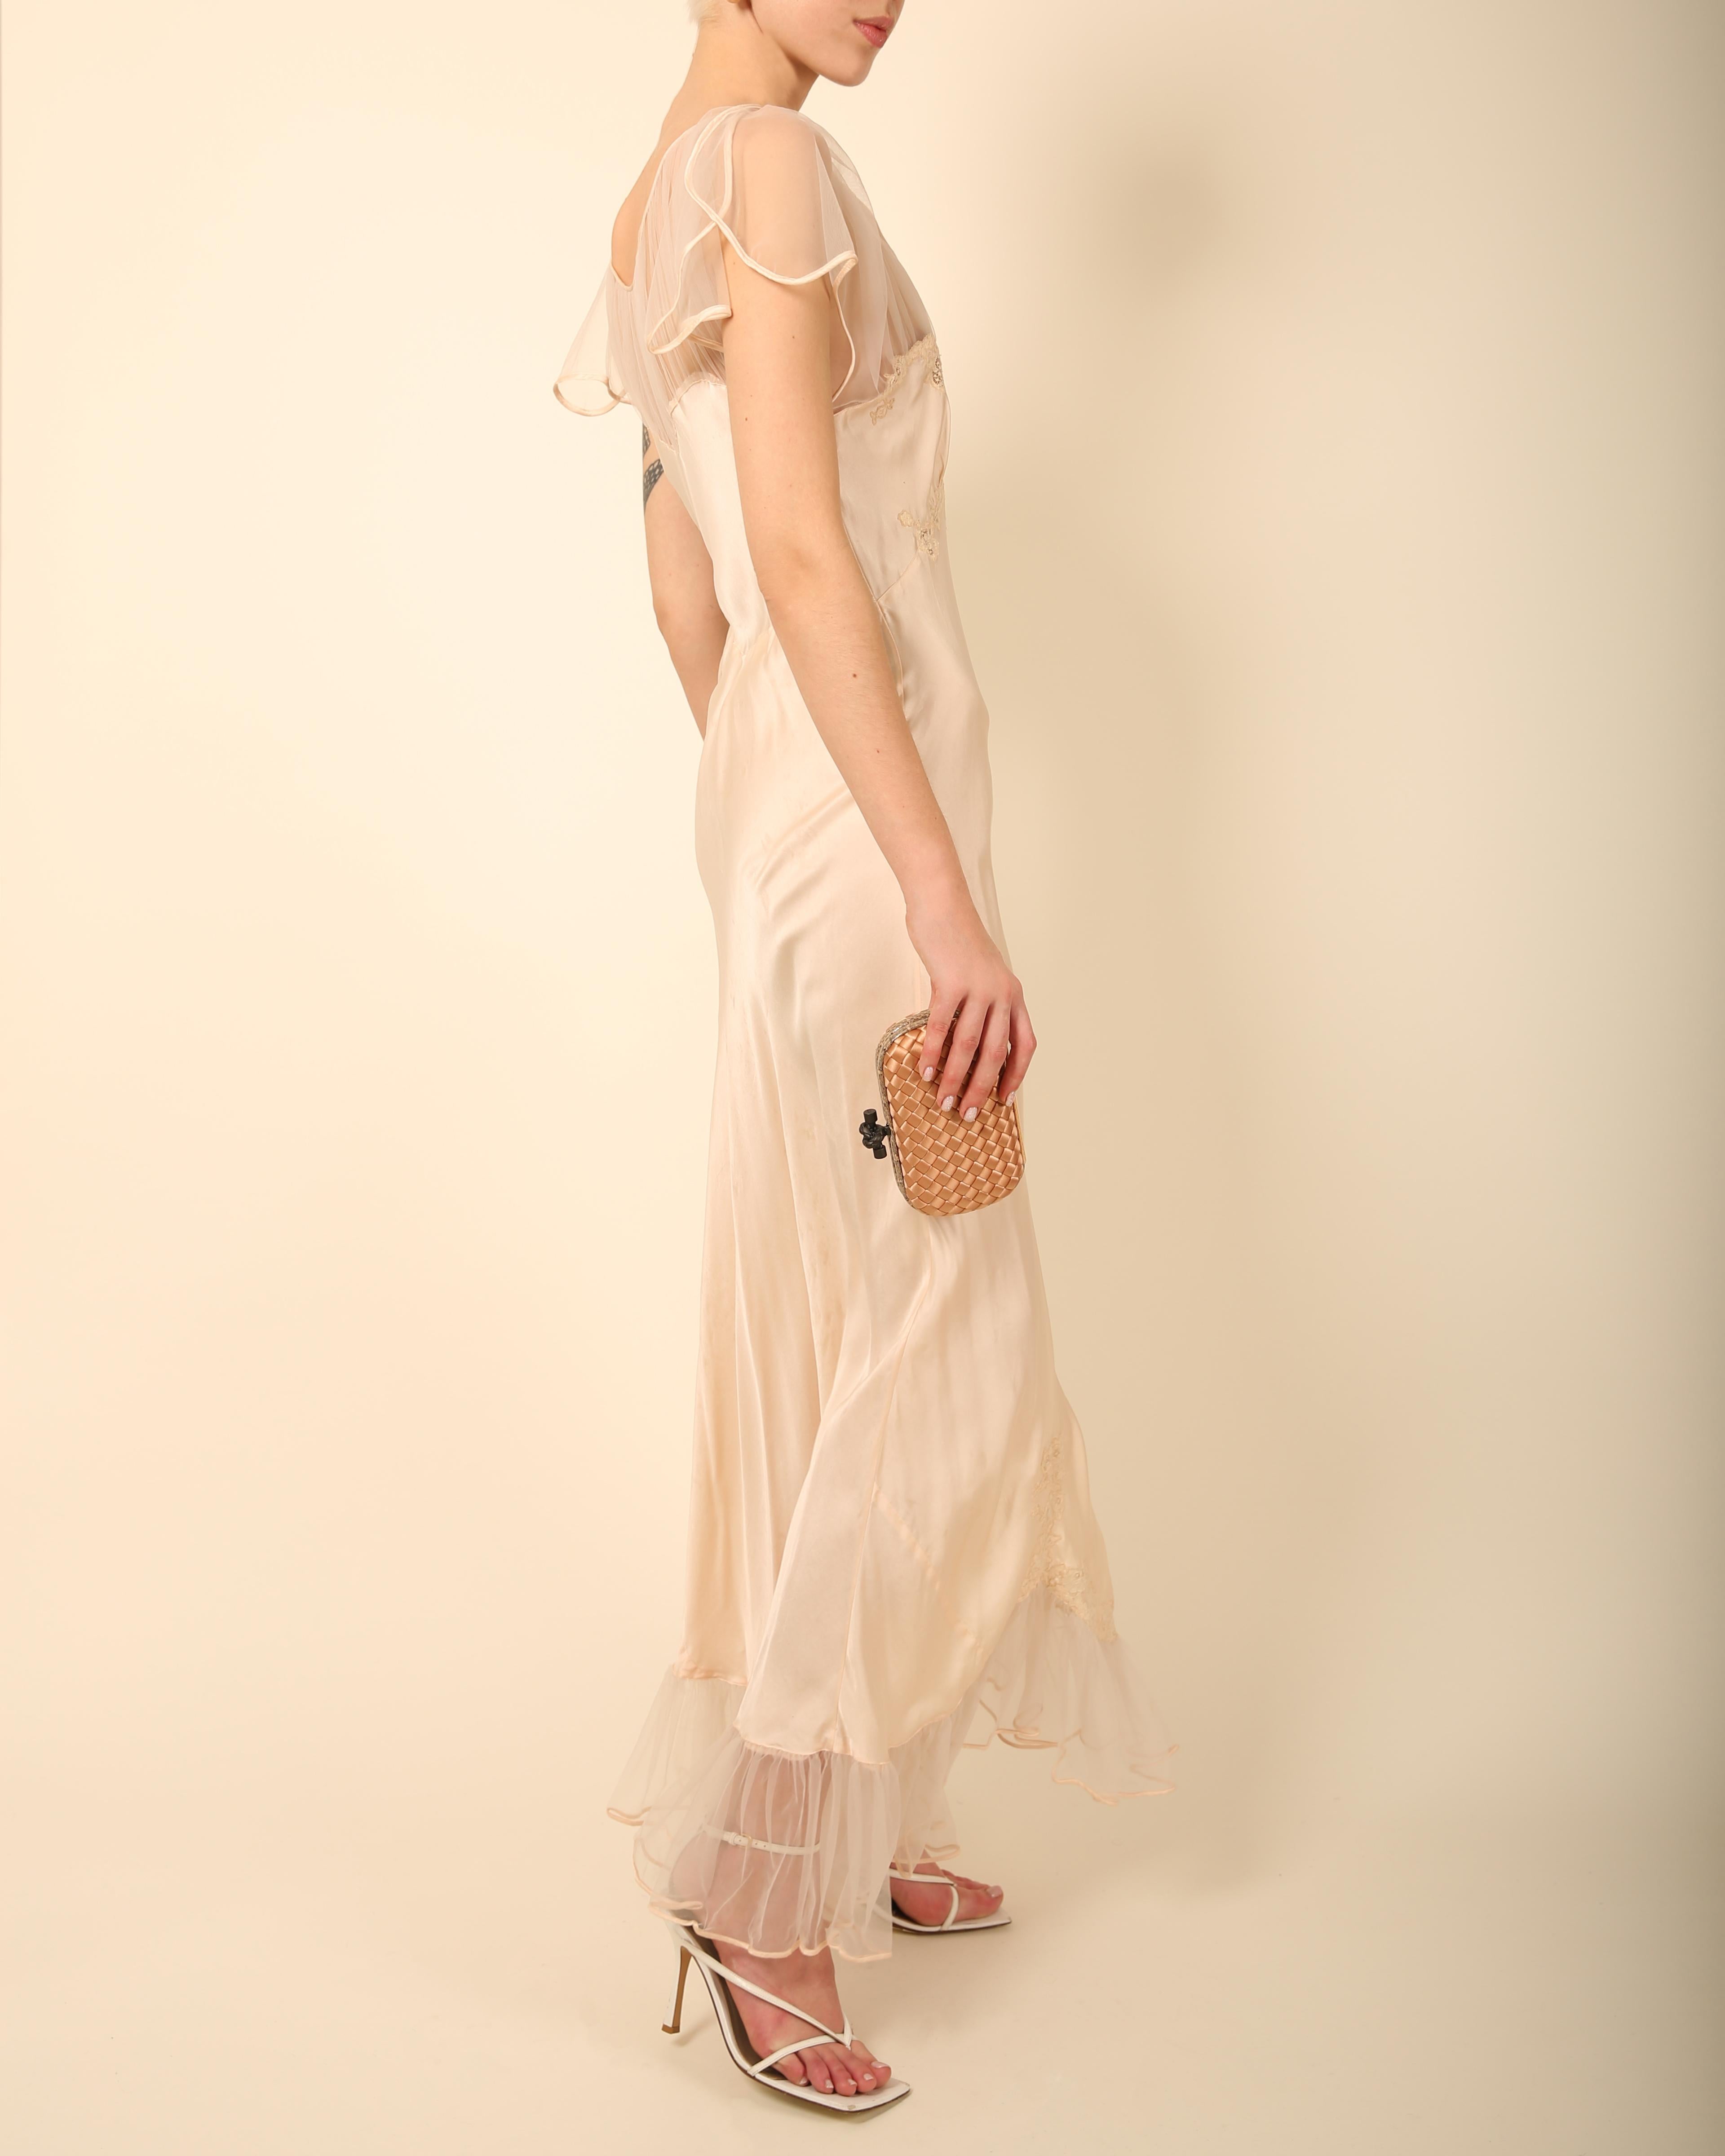 Vintage pink lace floral sheer silk ruffle nightgown robe bias maxi slip dress 2